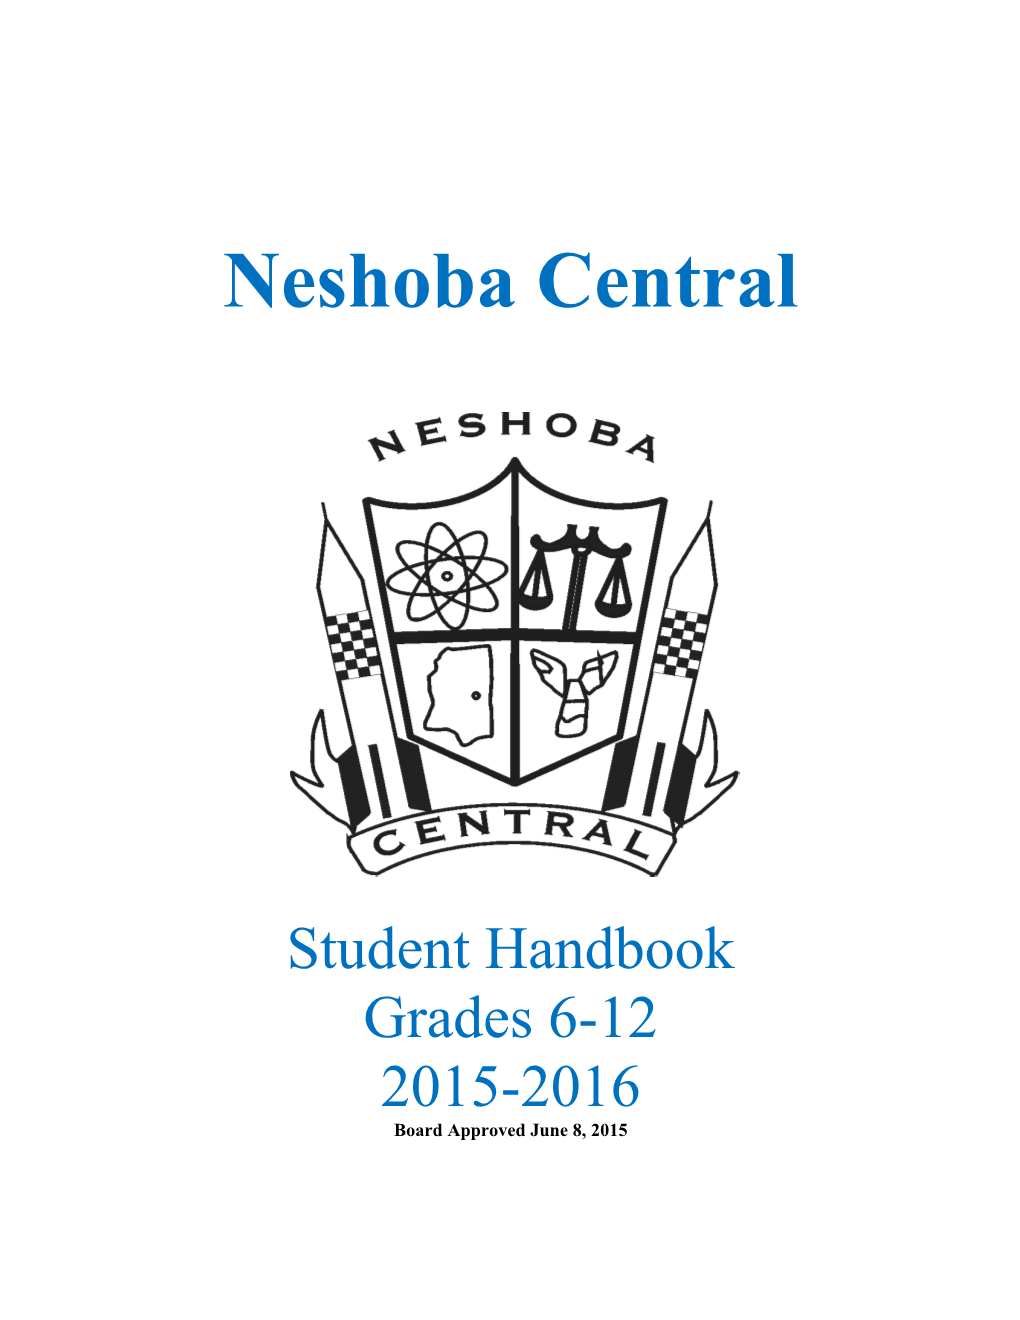 Neshoba County Schools Secondary Handbook 2015-2016